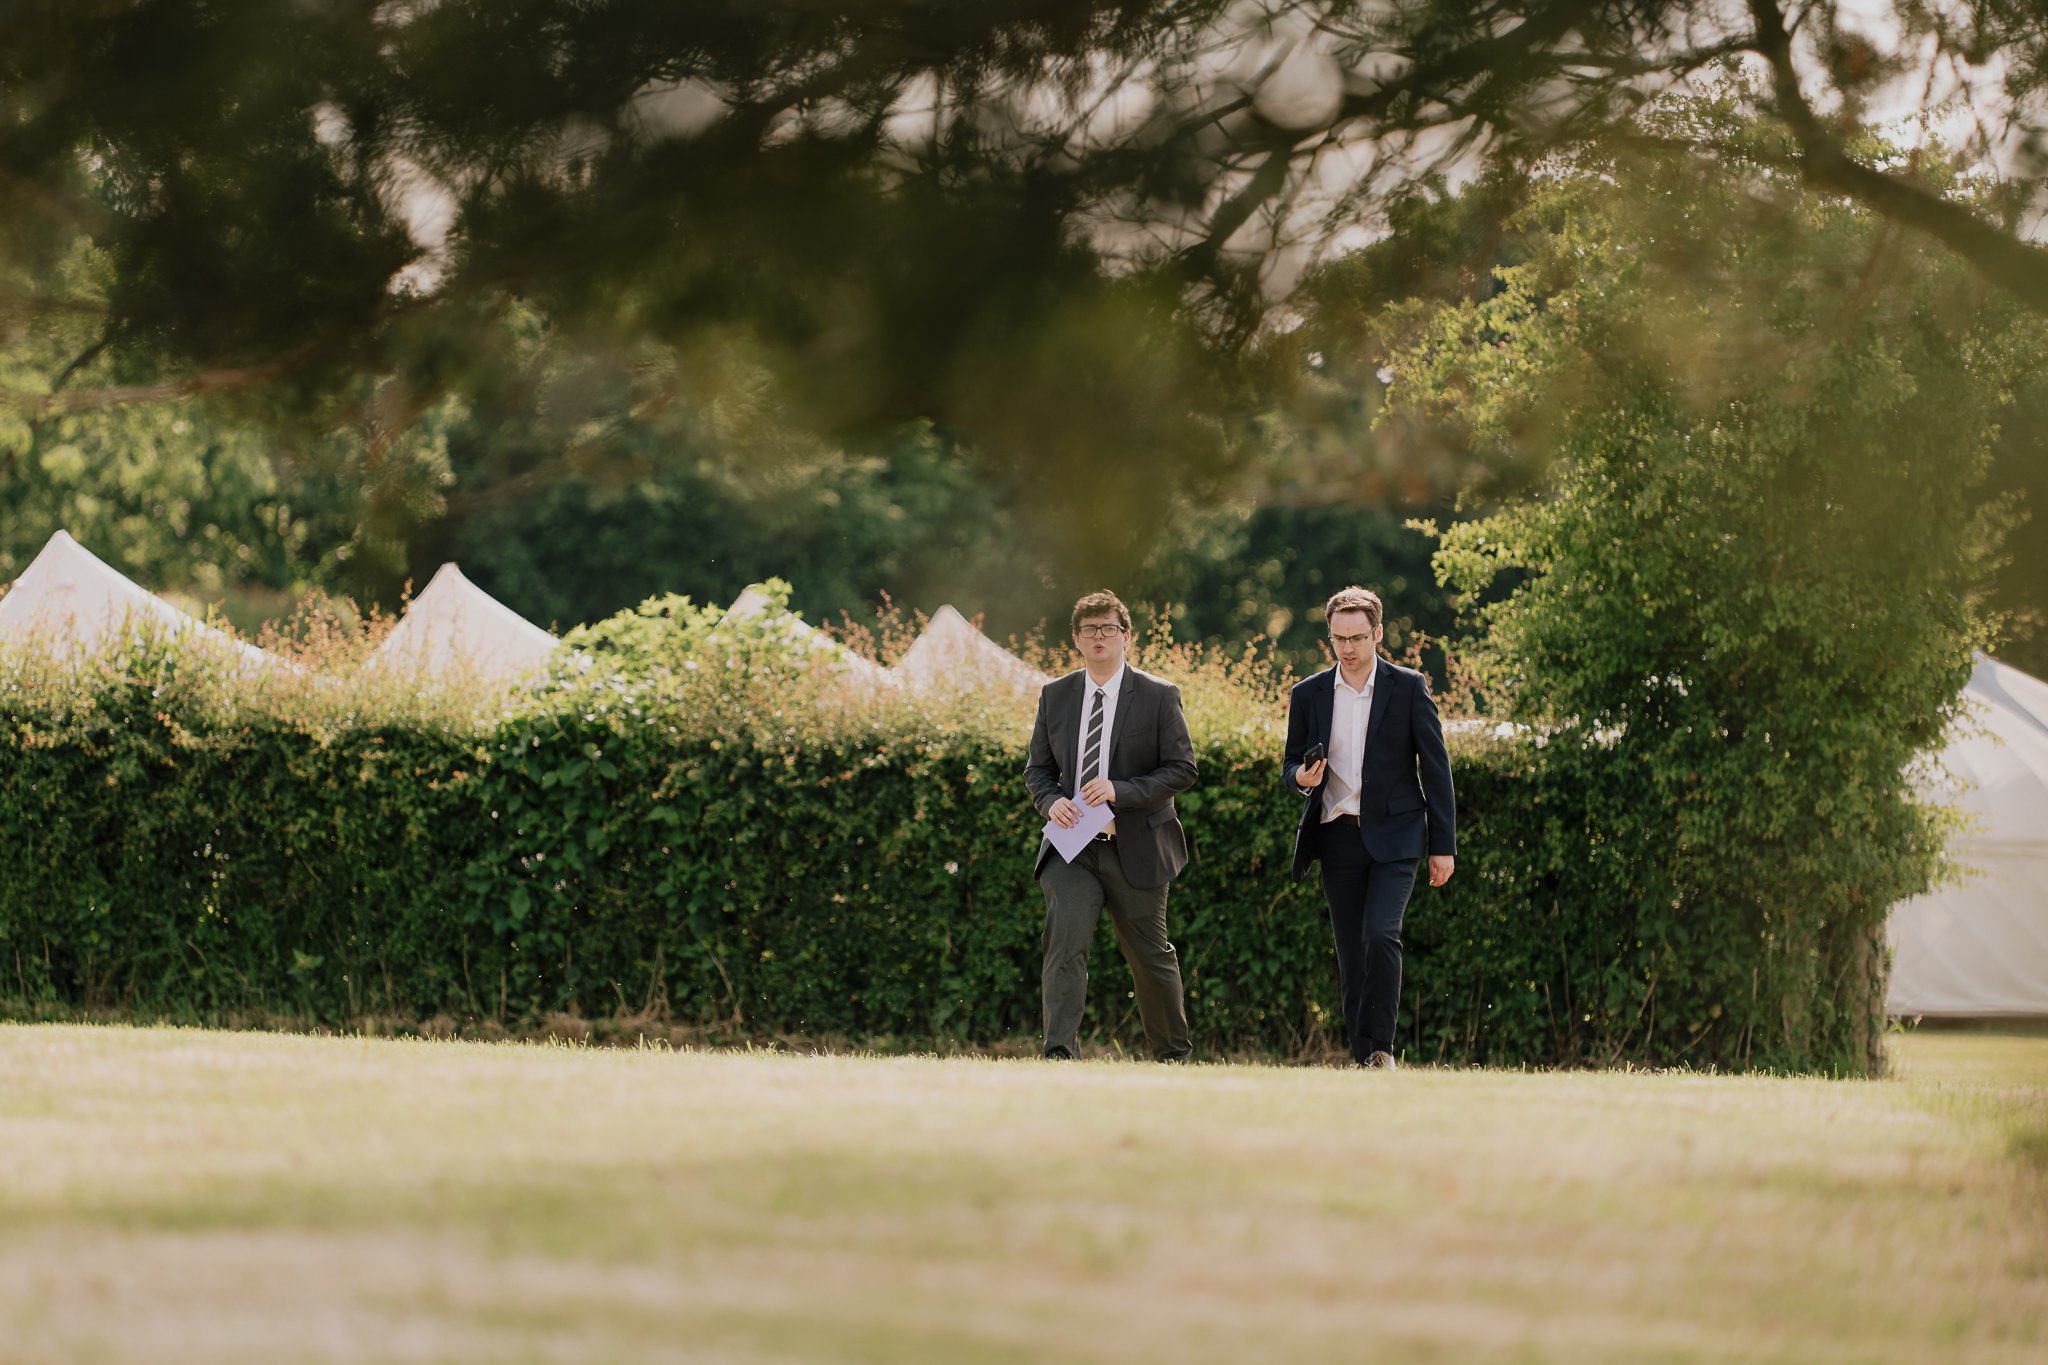 A&J - Wedding at Pennard Hill Farm, Somerset, UK. 4S-159.jpg